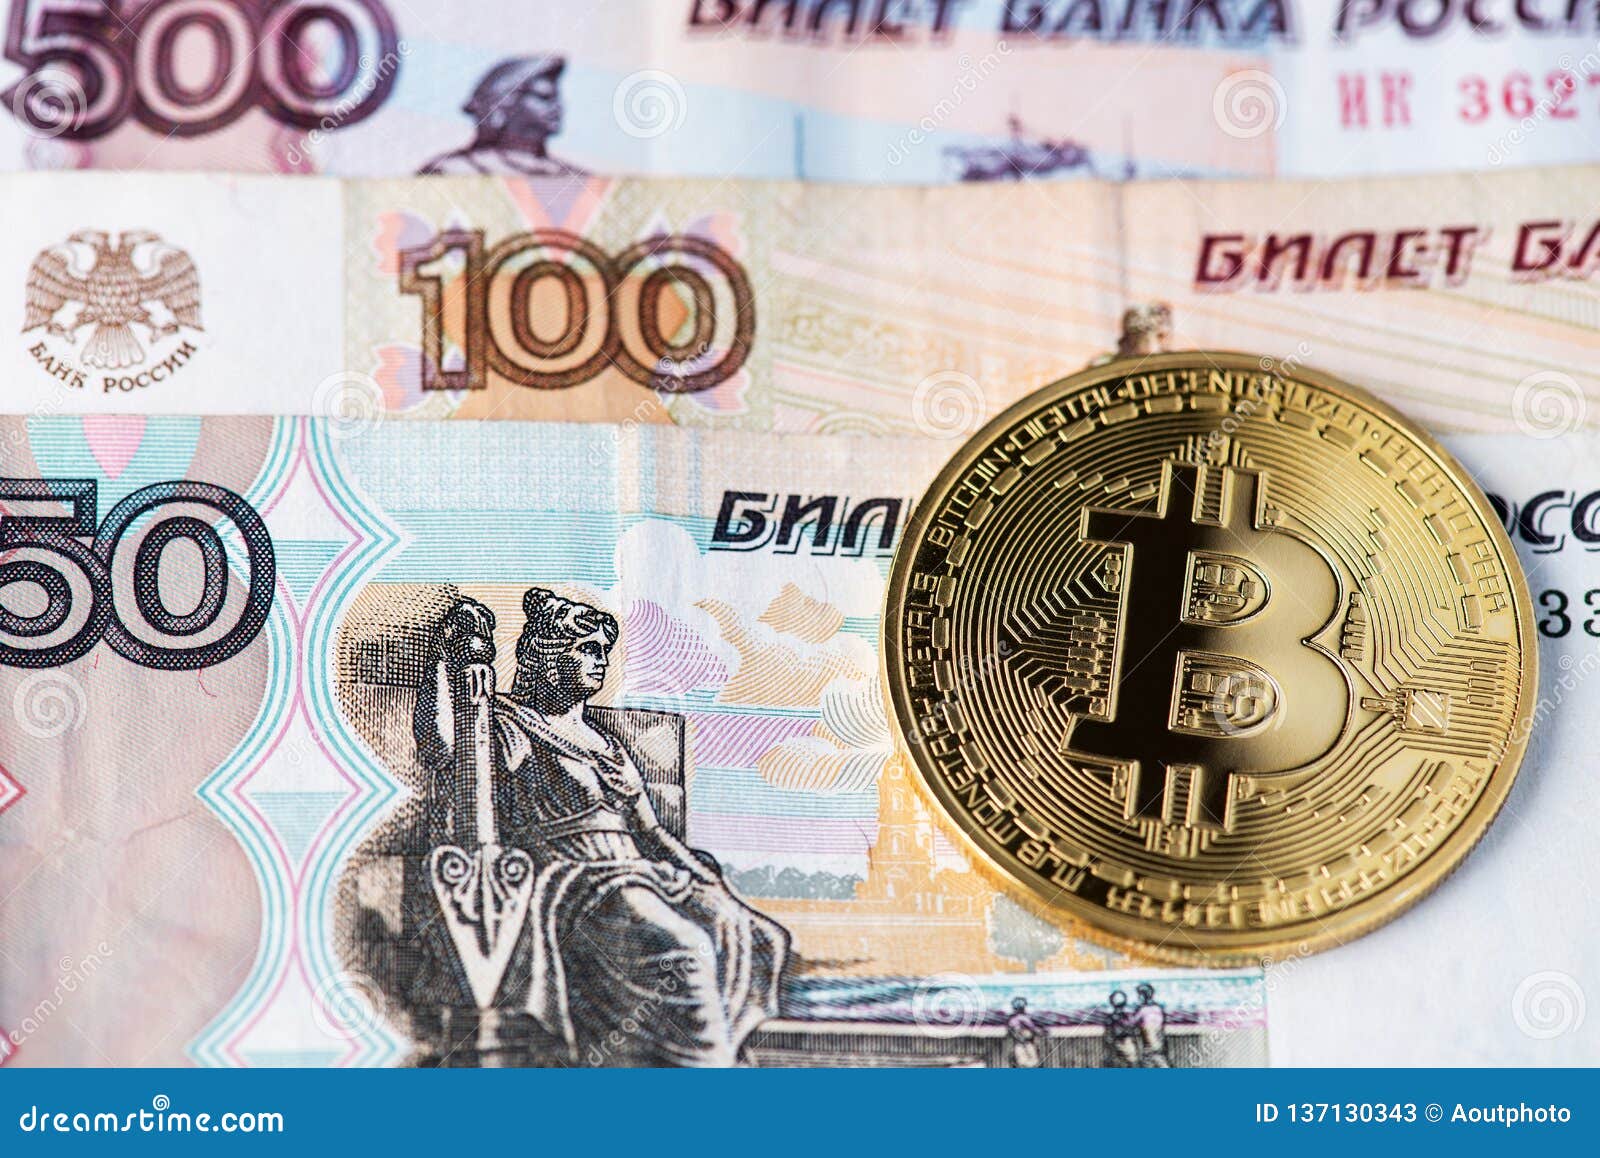 Обмен рубли на биткоины от 500 курс по приватбанку